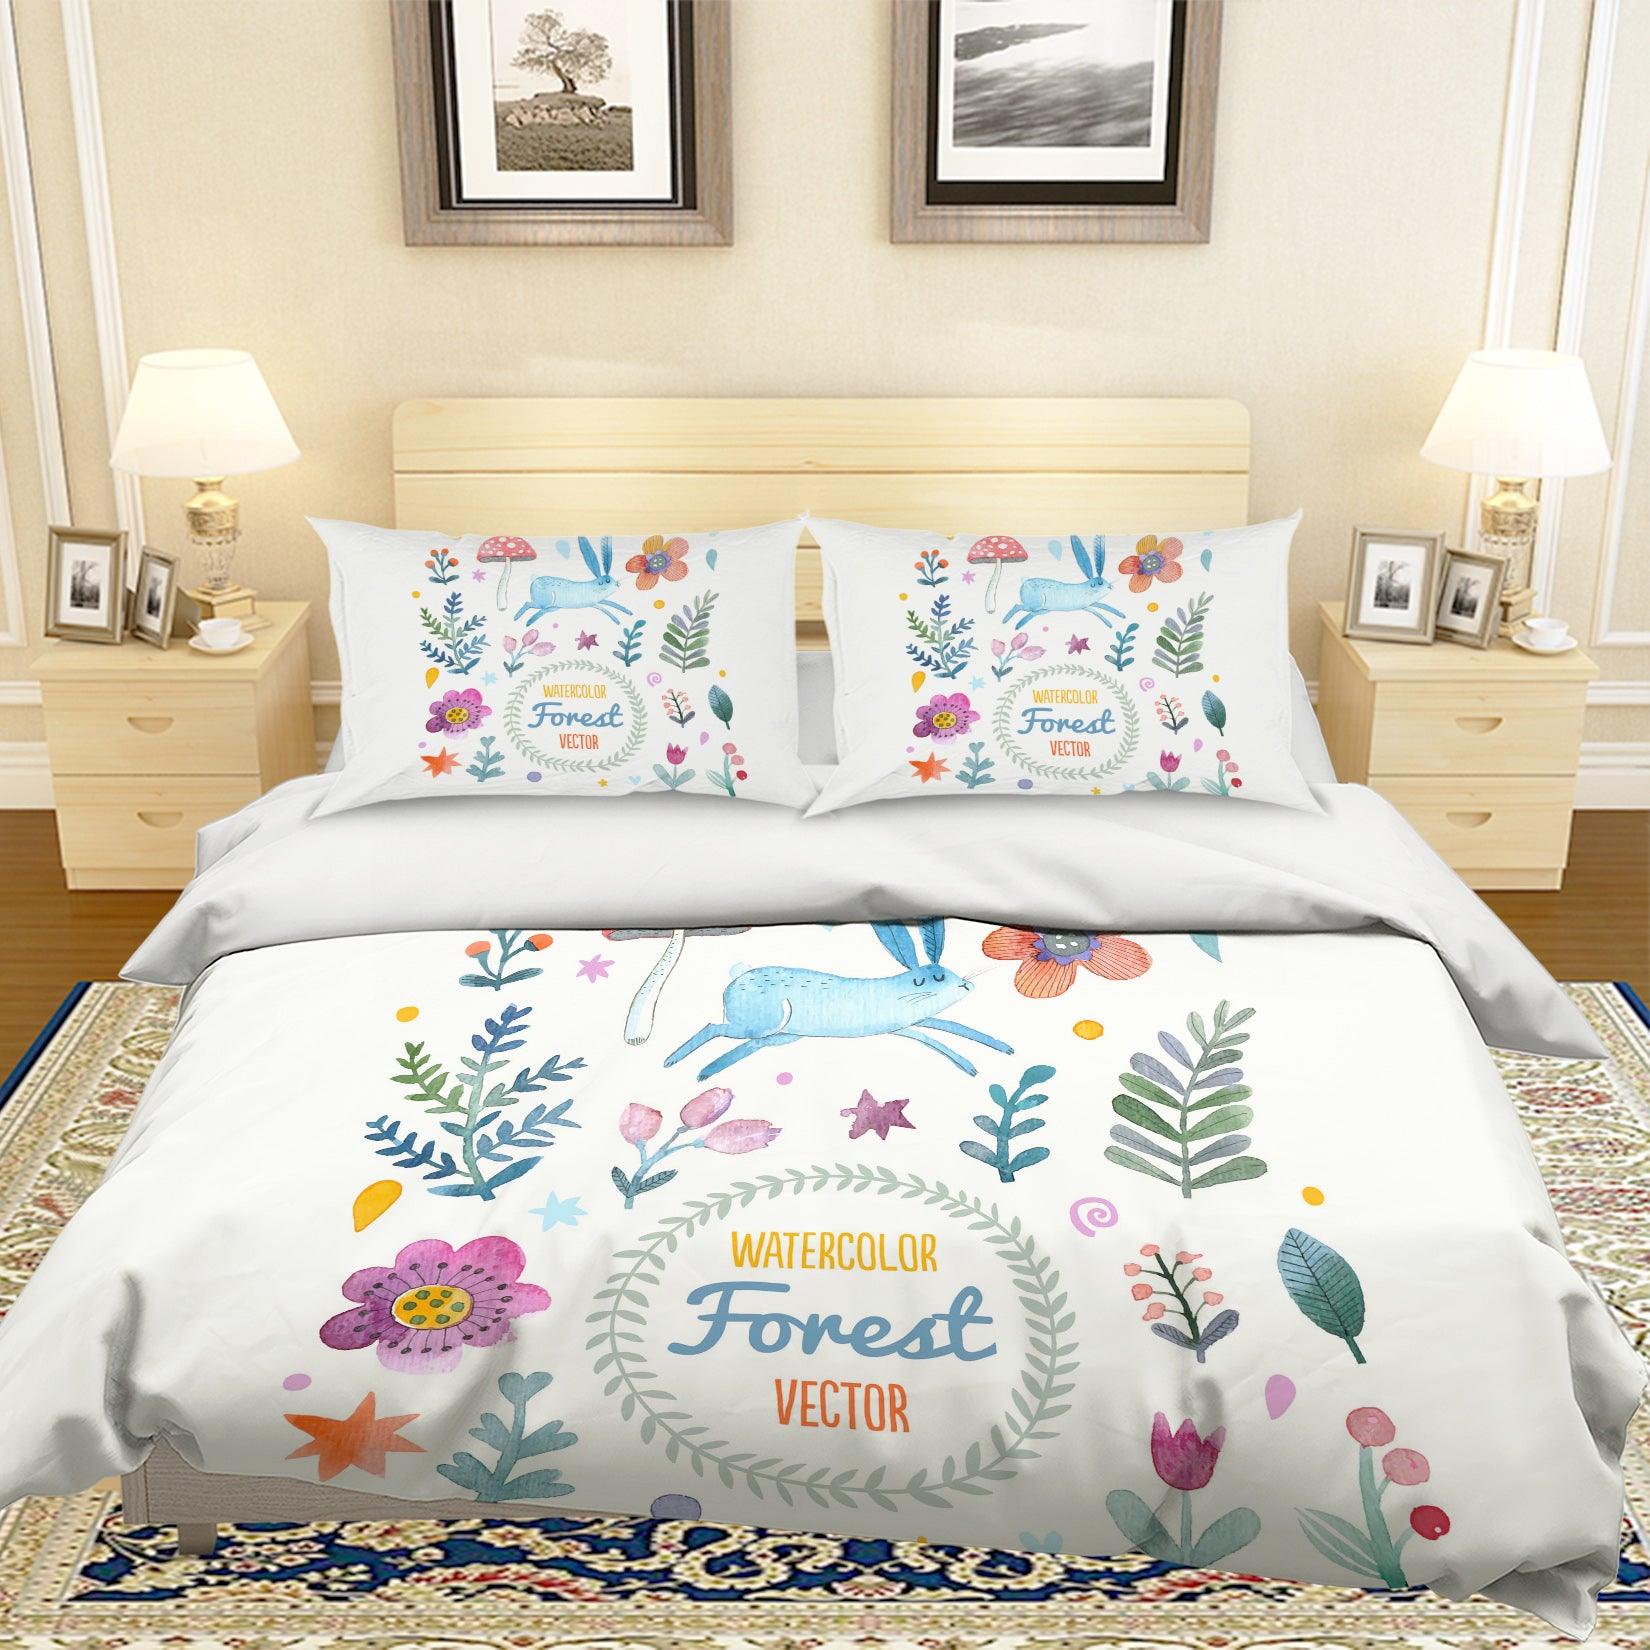 3D Cartoon Rabbit Flower Quilt Cover Set Bedding Set Pillowcases 69- Jess Art Decoration